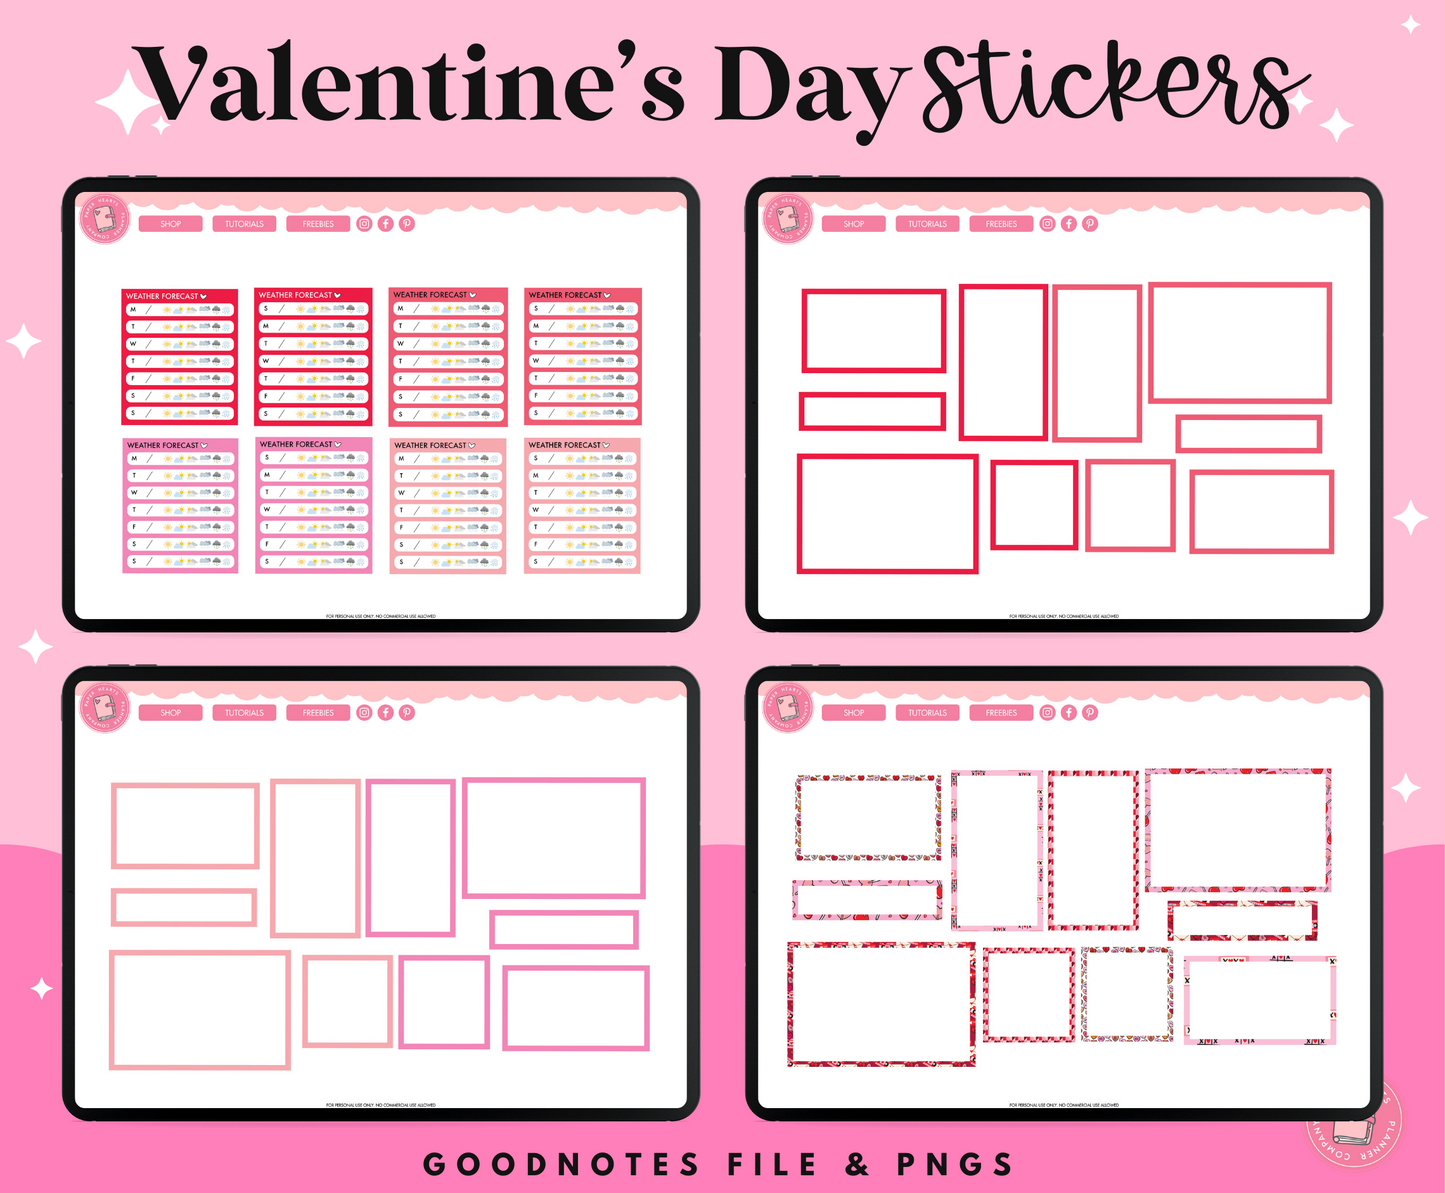 Be My Valentine Stickers